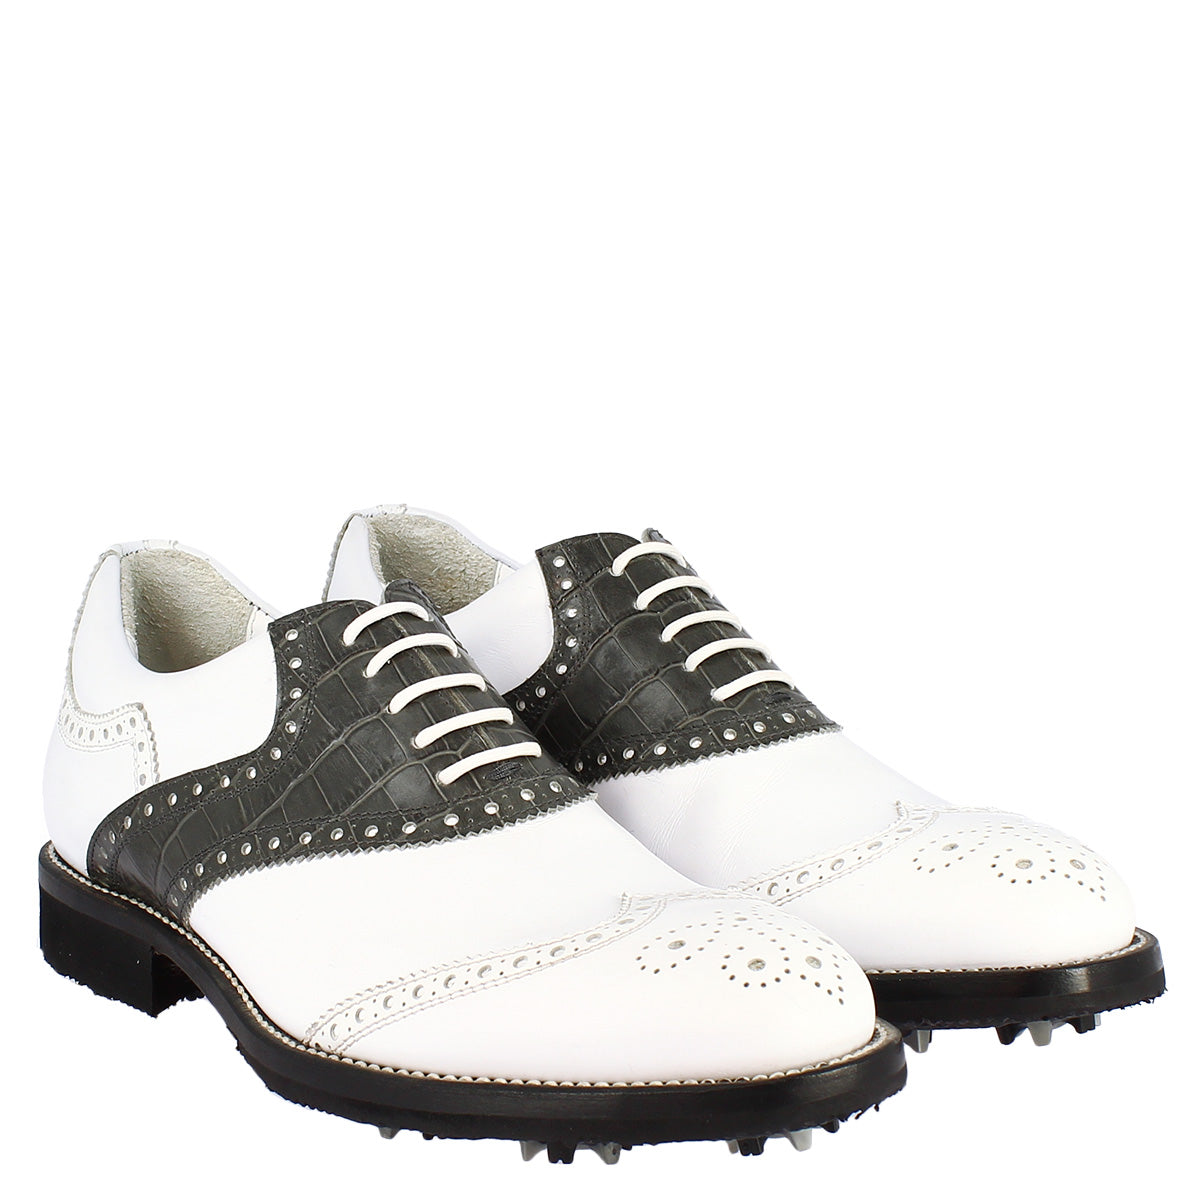 Scarpe da golf donna classiche artigianali in pelle bianca grigia